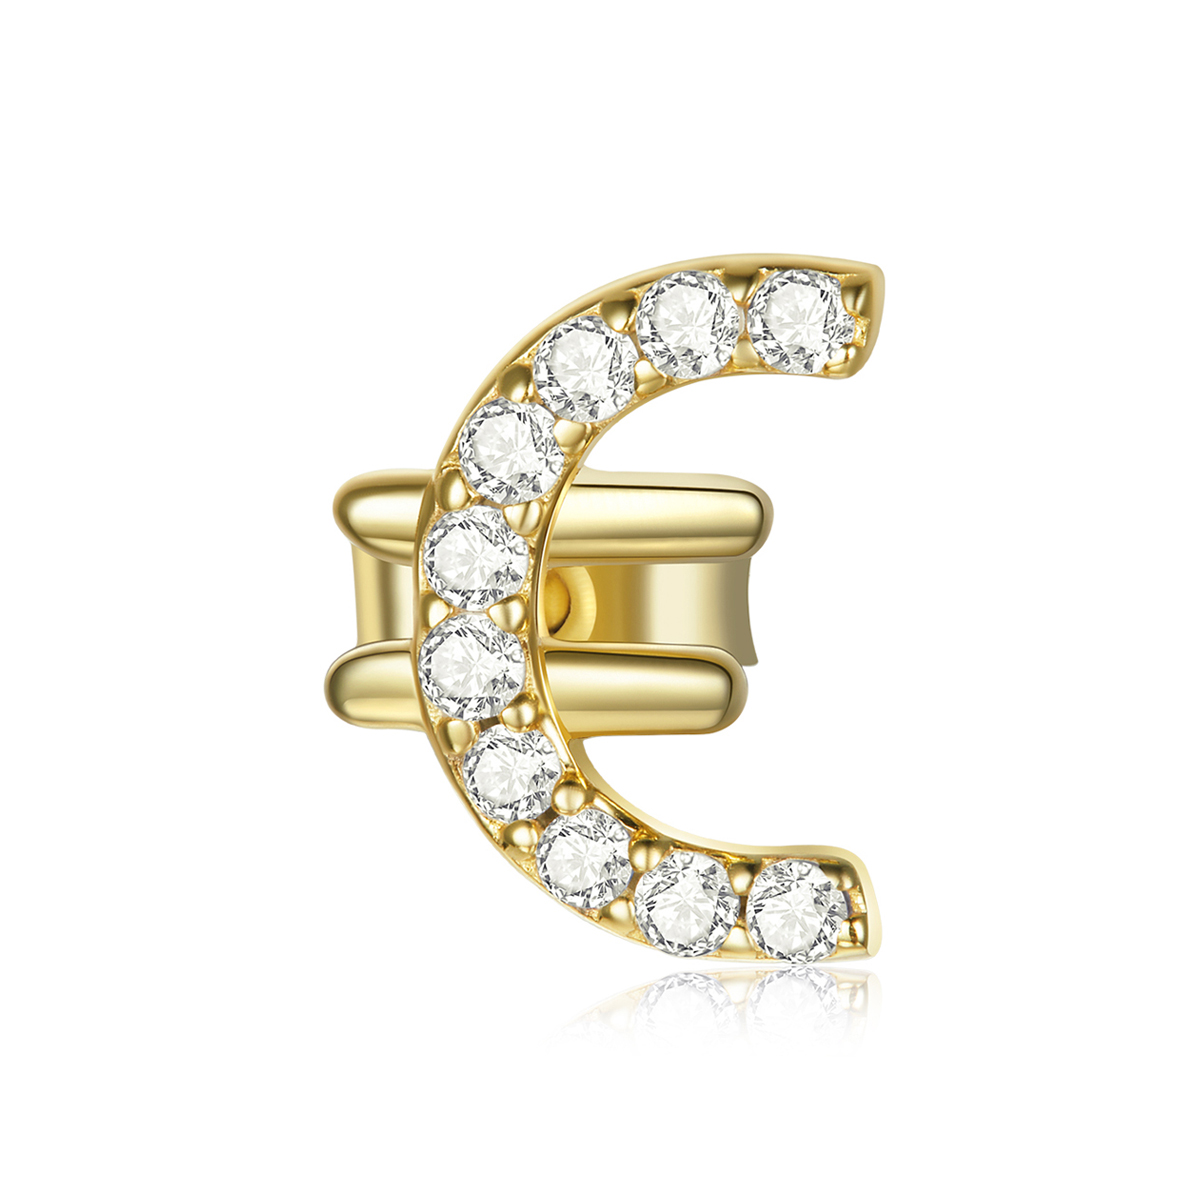 pandora style secret symbol € stud earrings sce1074